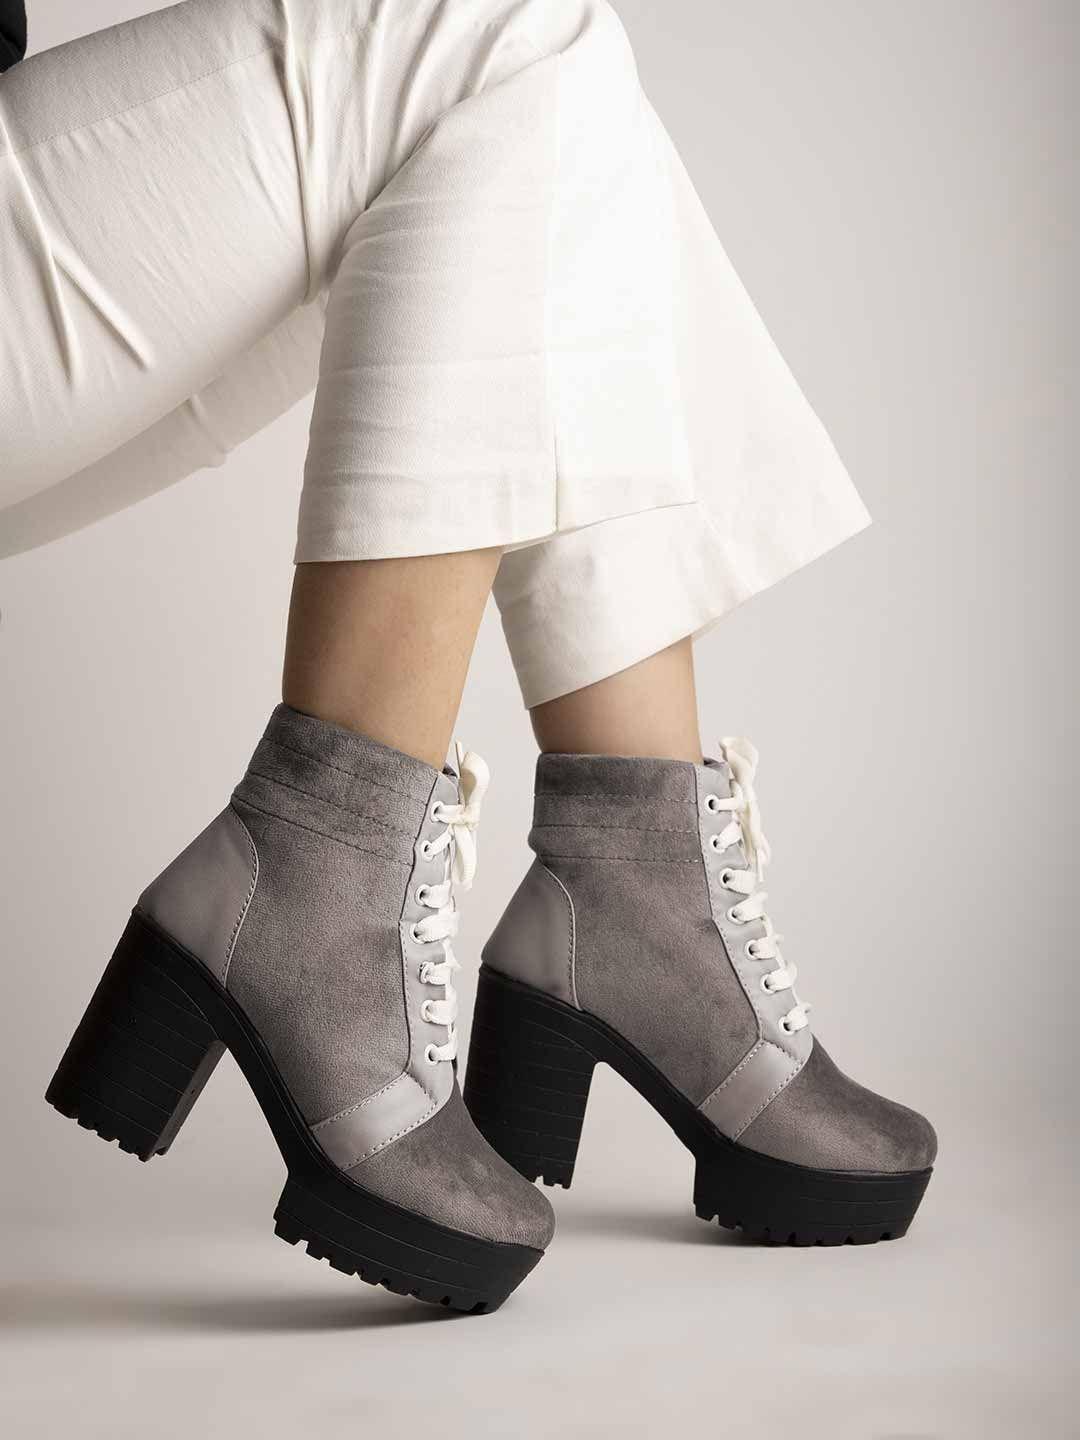 shoetopia girls grey suede wedge heeled boots